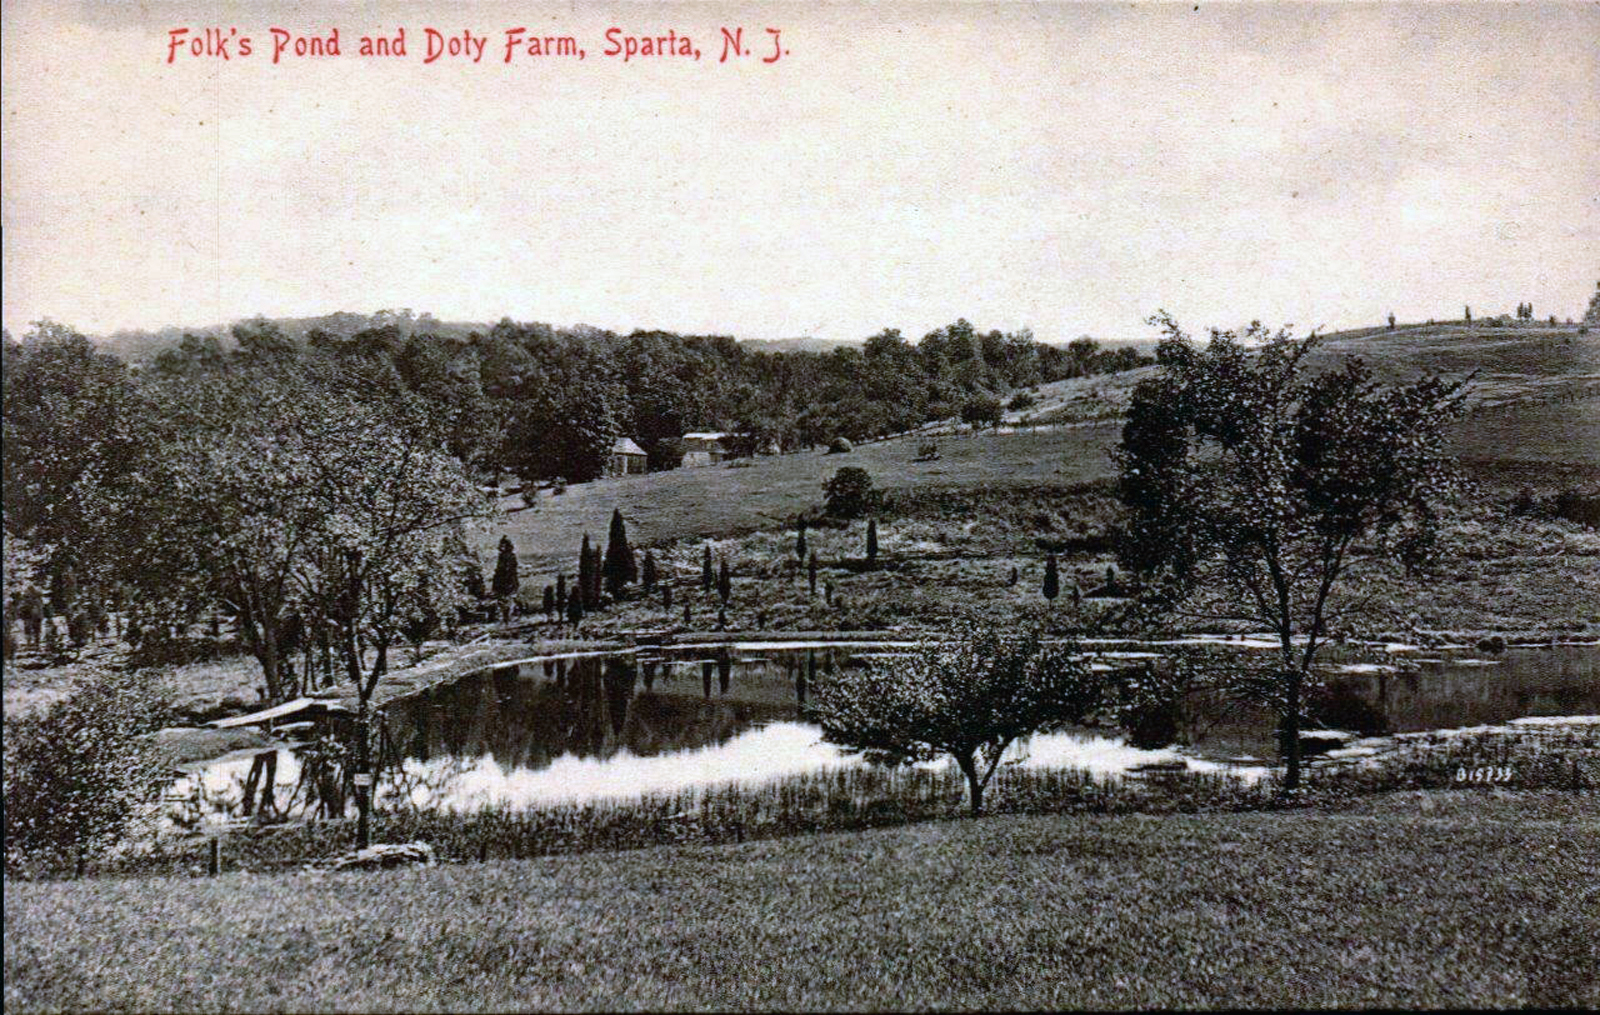 Sparta vicinity - Folks Pond and Doty Farm - c 1819 - b